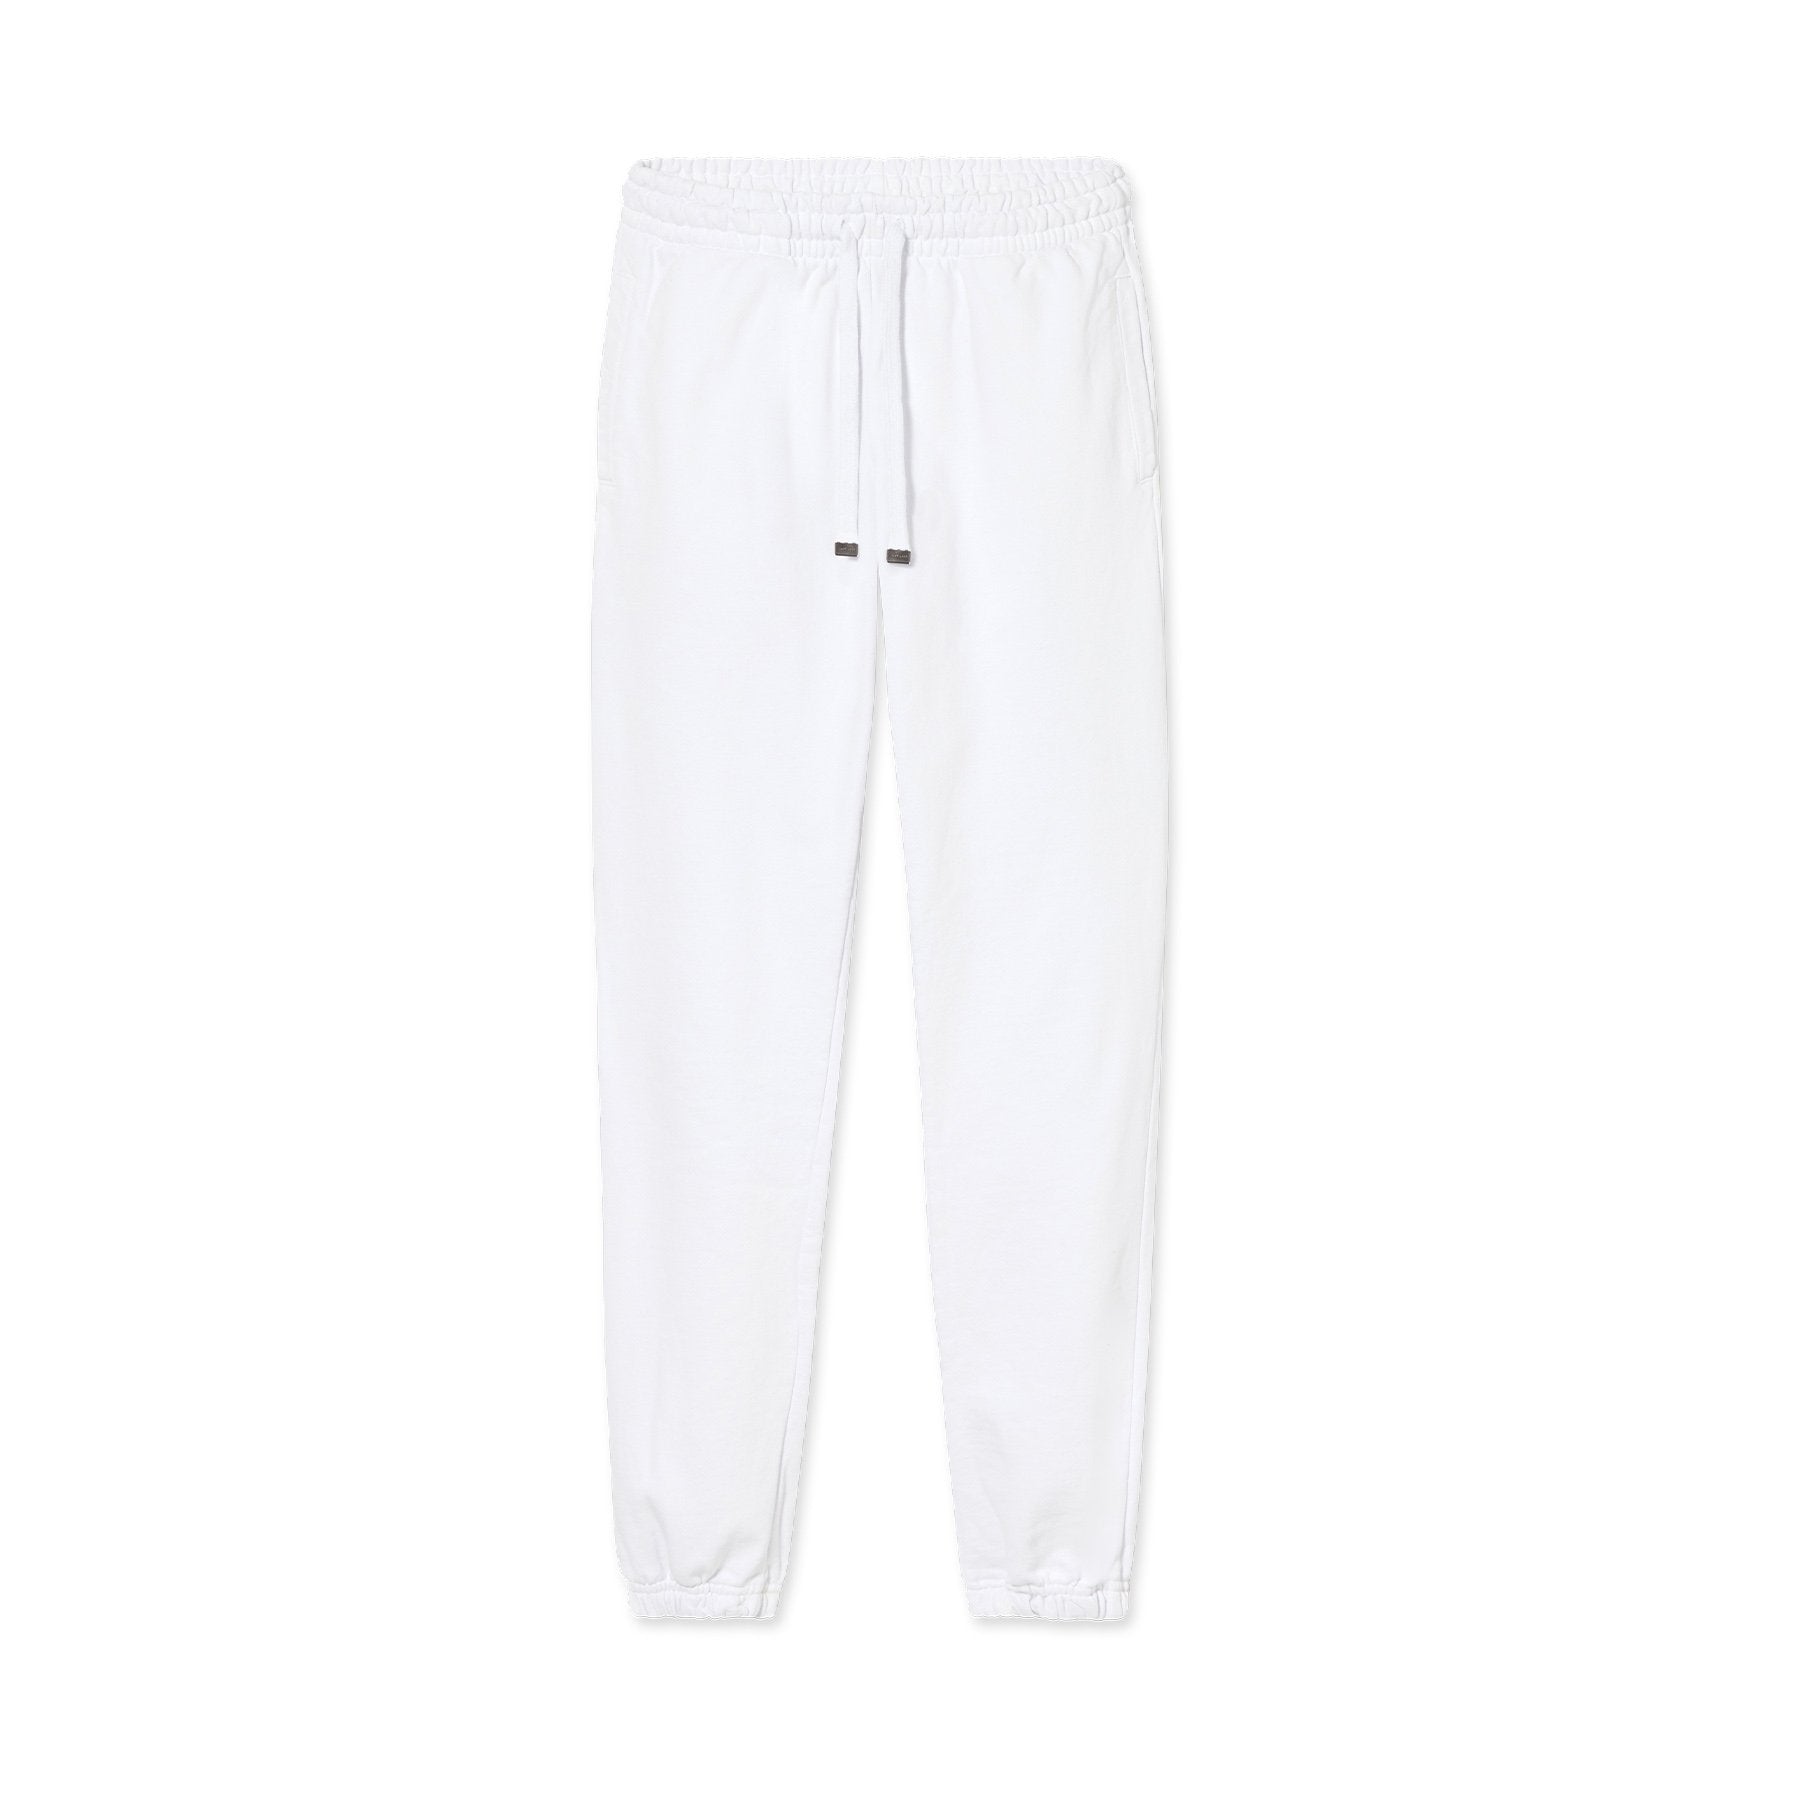 White Sweatpants Xs Wholesale Discounts